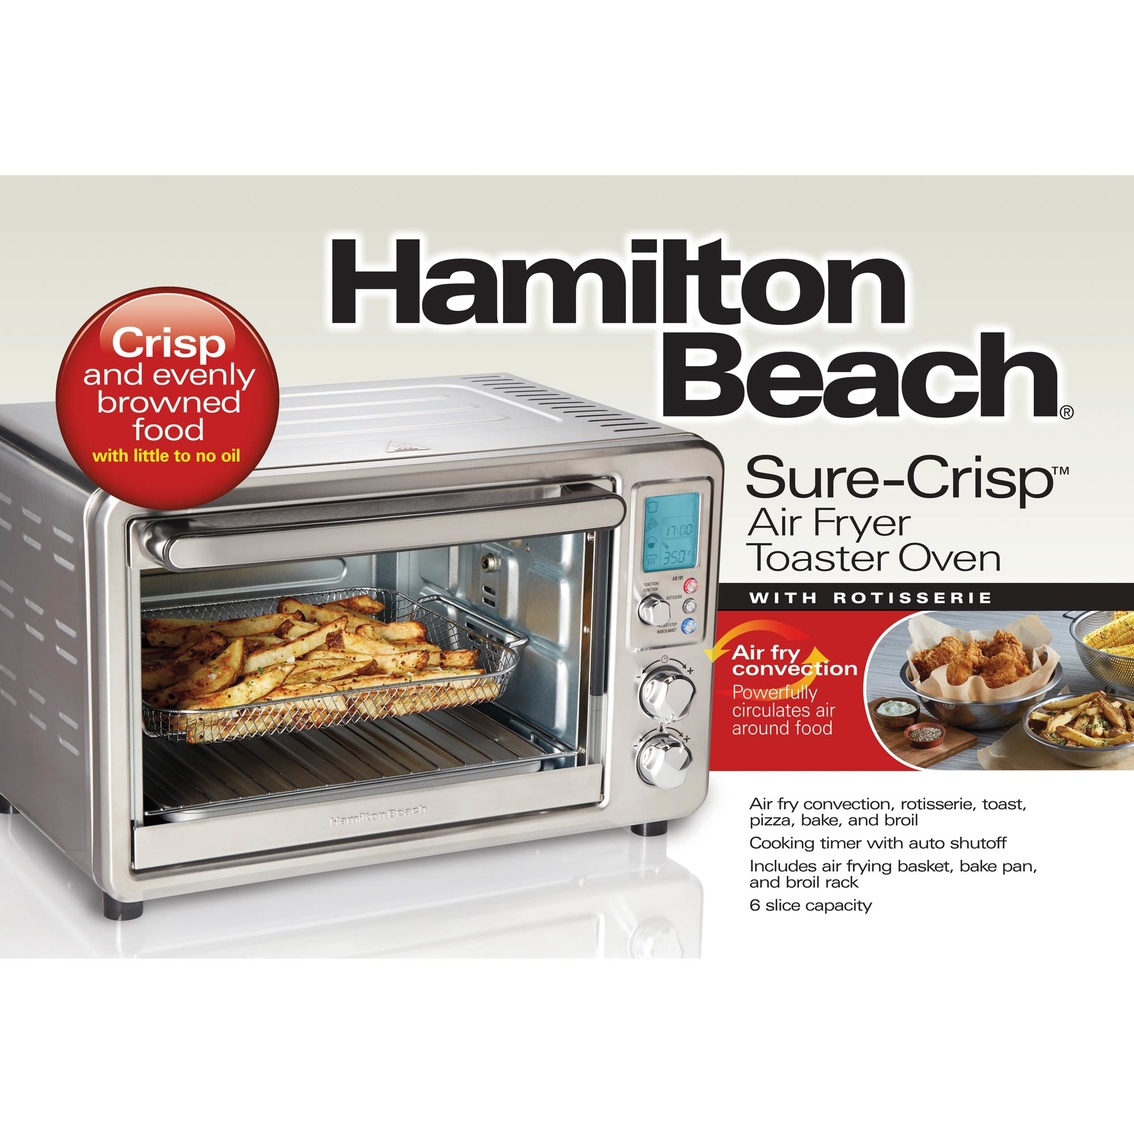 Hamilton Beach Sure-Crisp Digital Air Fryer Toaster Oven with Rotisserie - Image 2 of 6